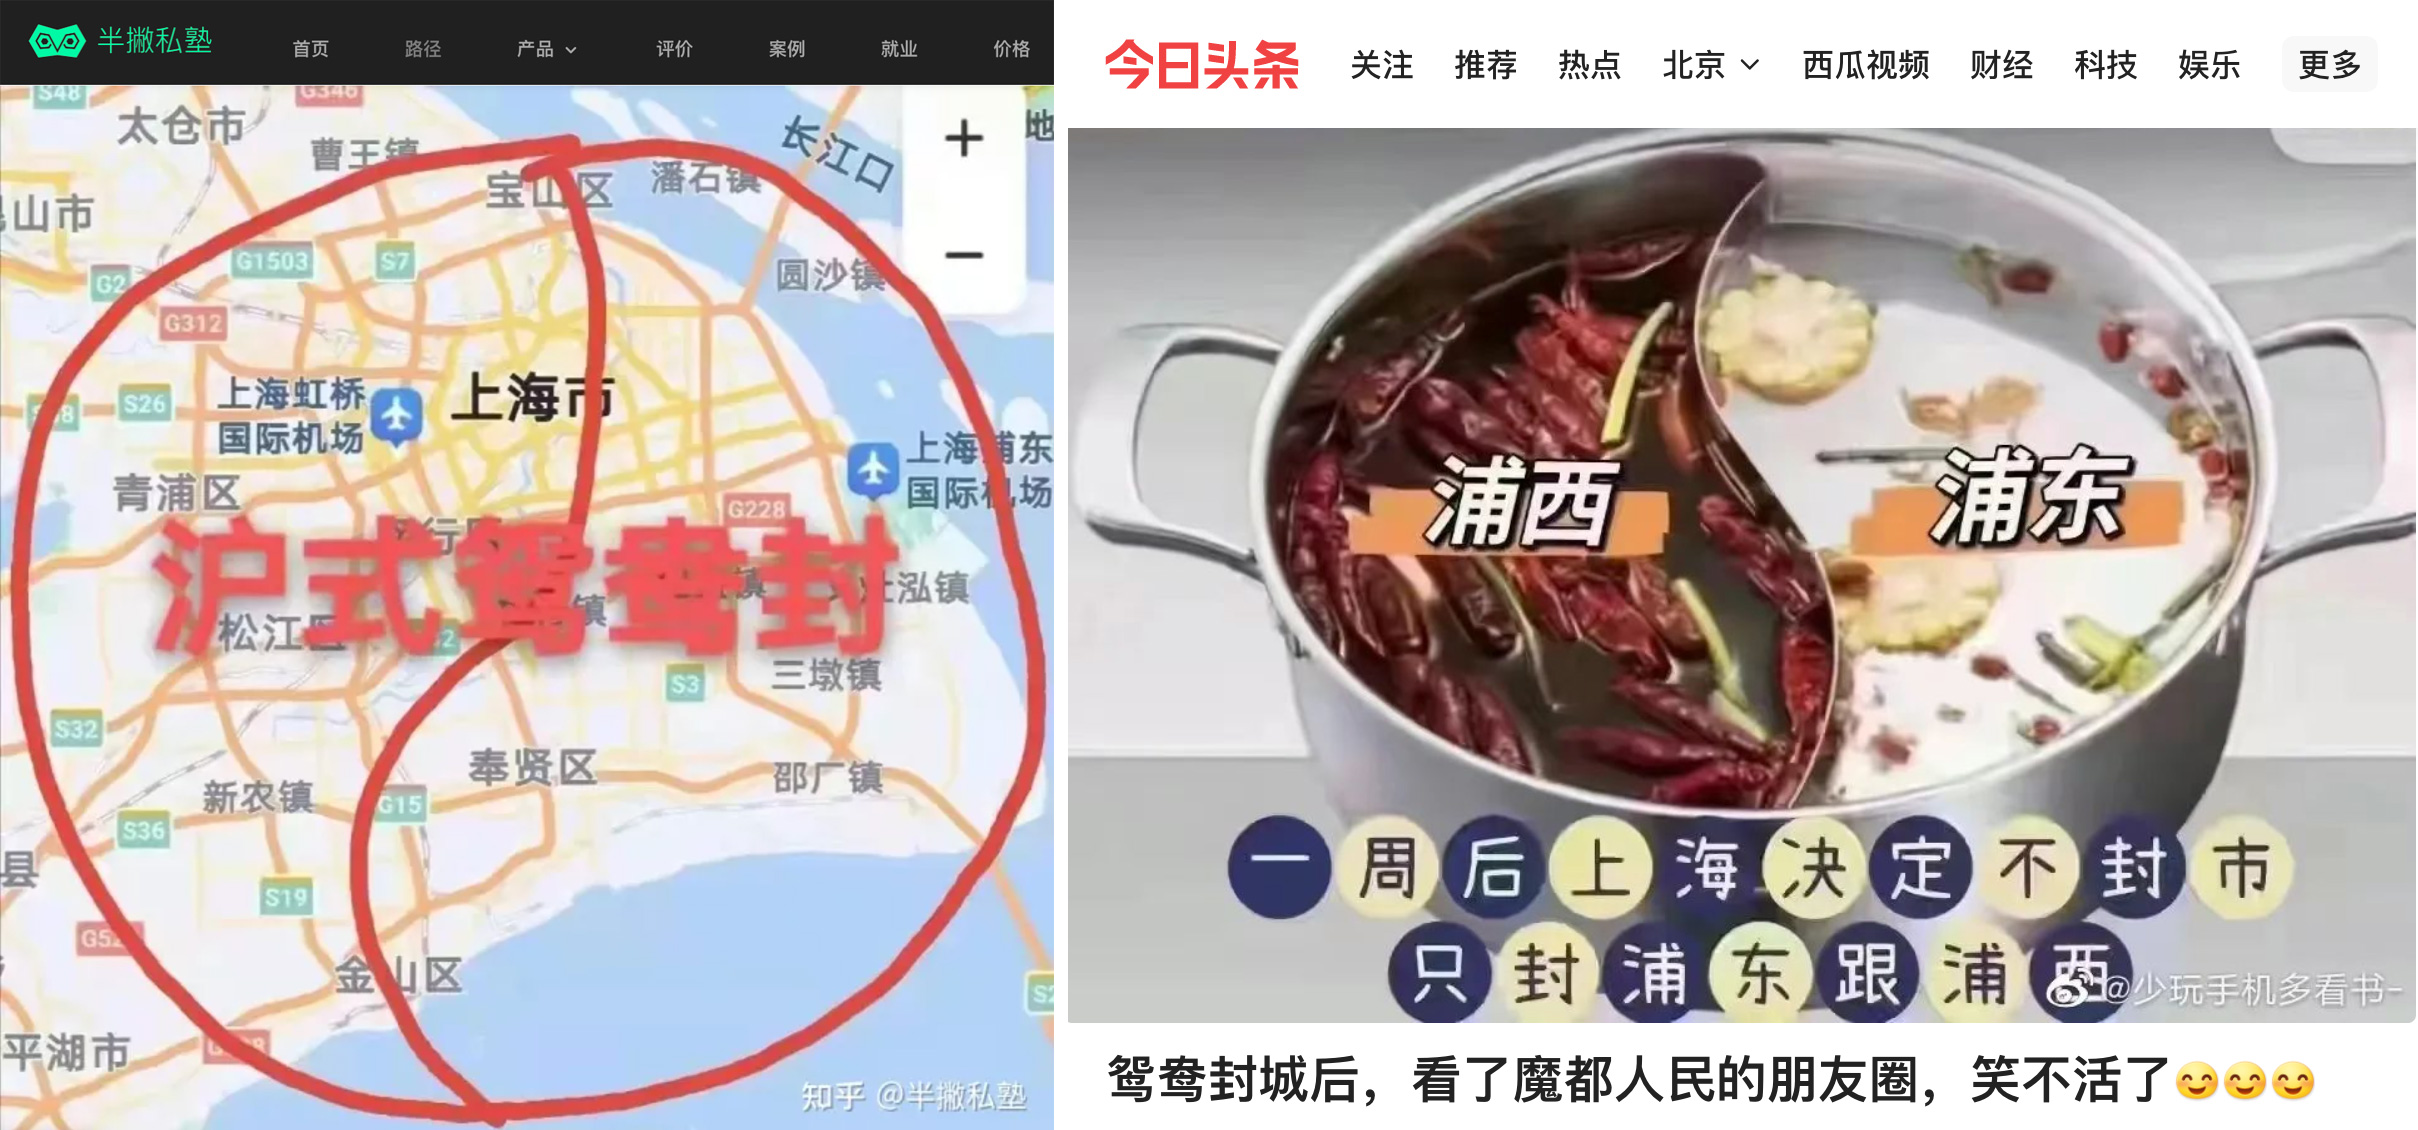 shanghai lockdown 上海 ロックダウン 封鎖 隔離